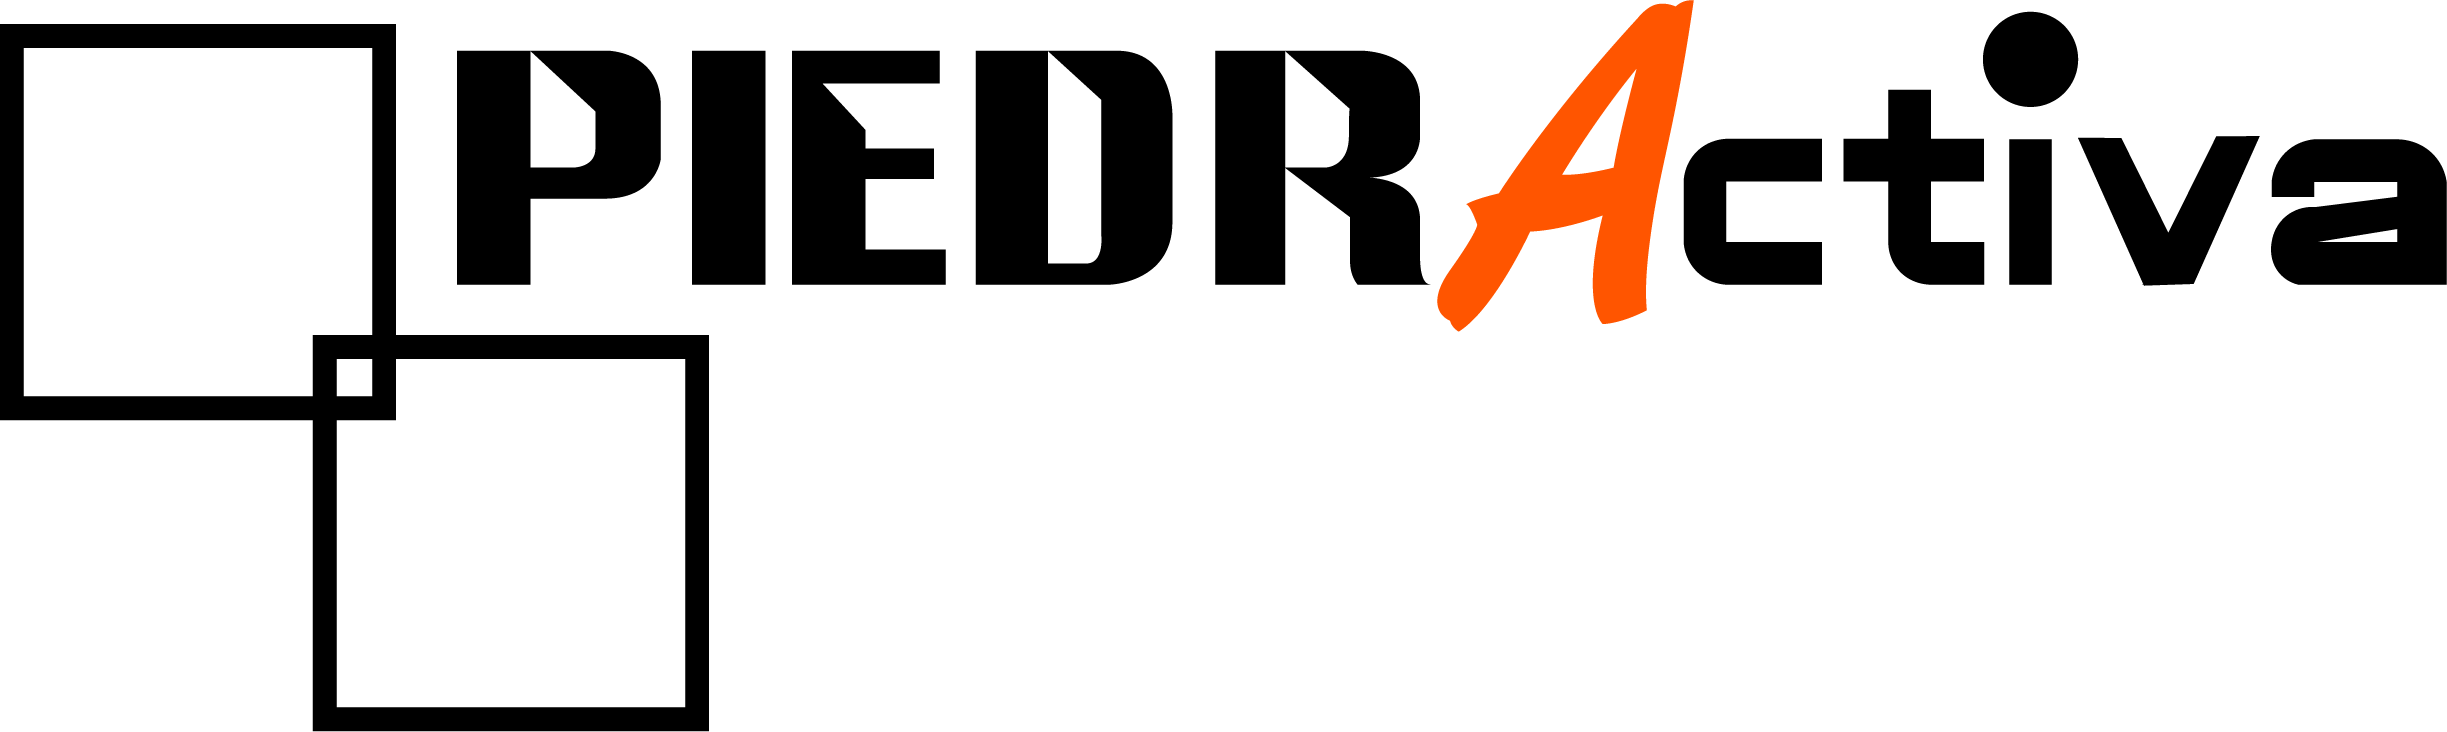 logotipo piedractiva